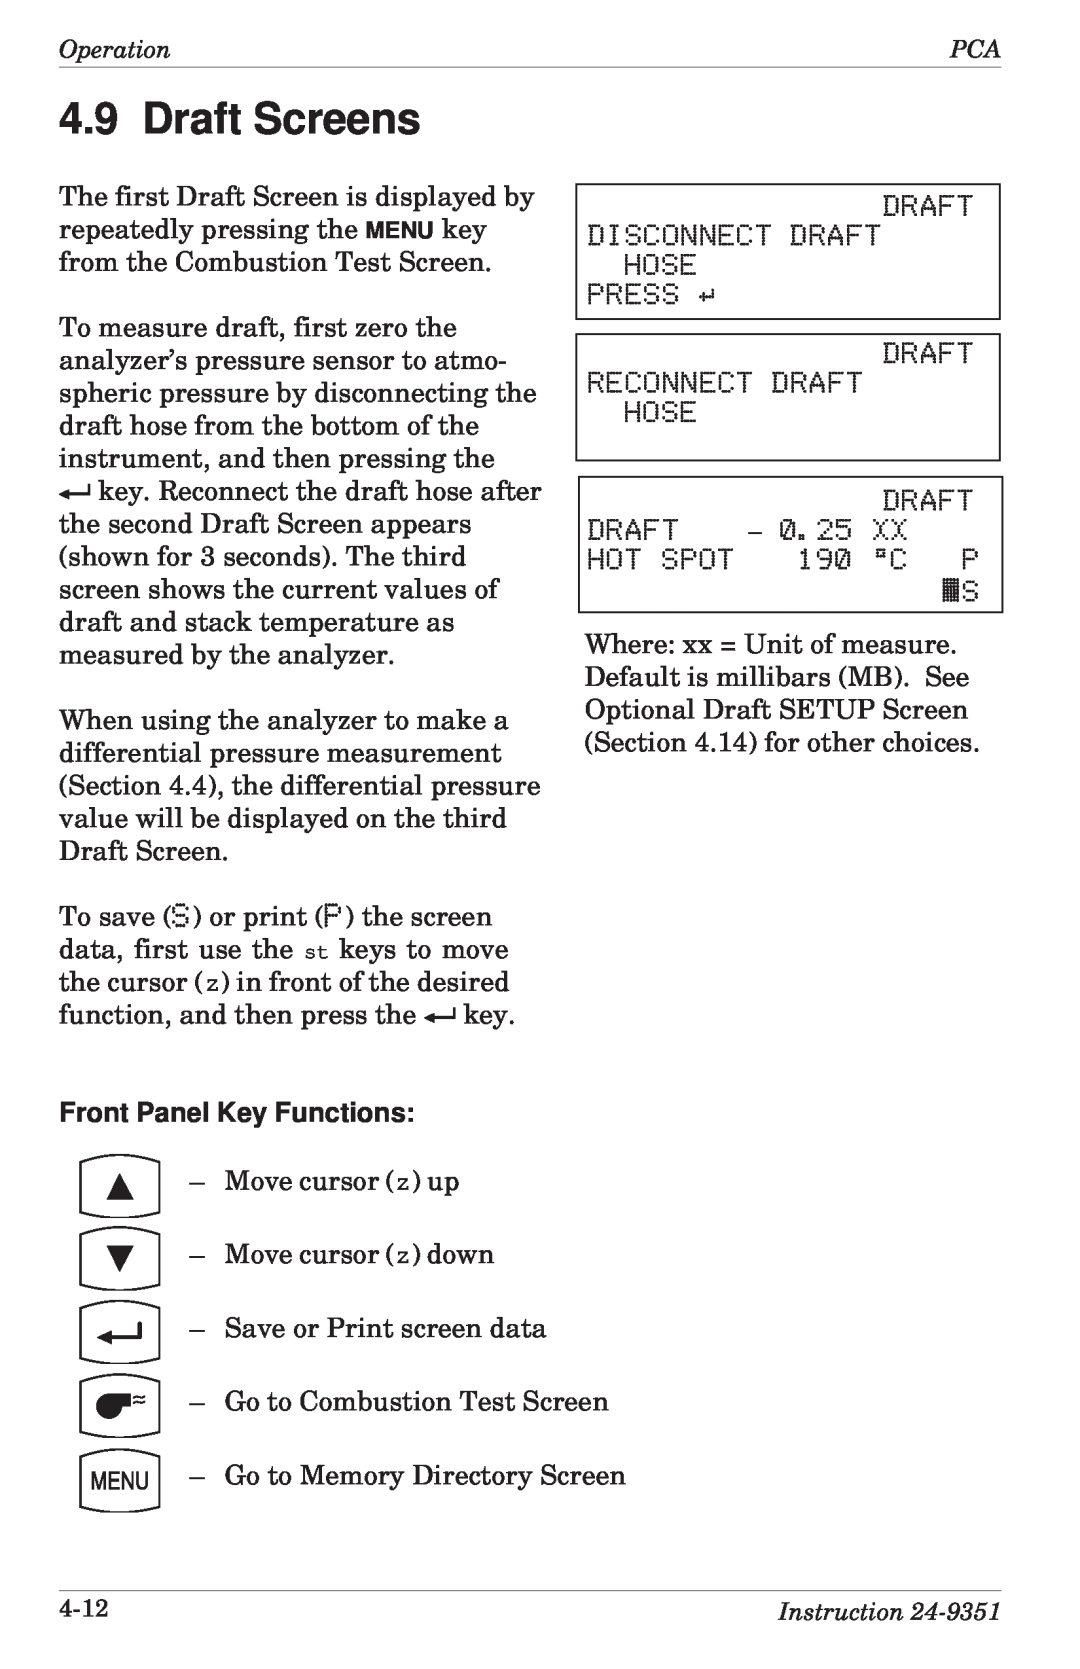 Bacharach 24-9351 manual Draft Screens, Front Panel Key Functions 